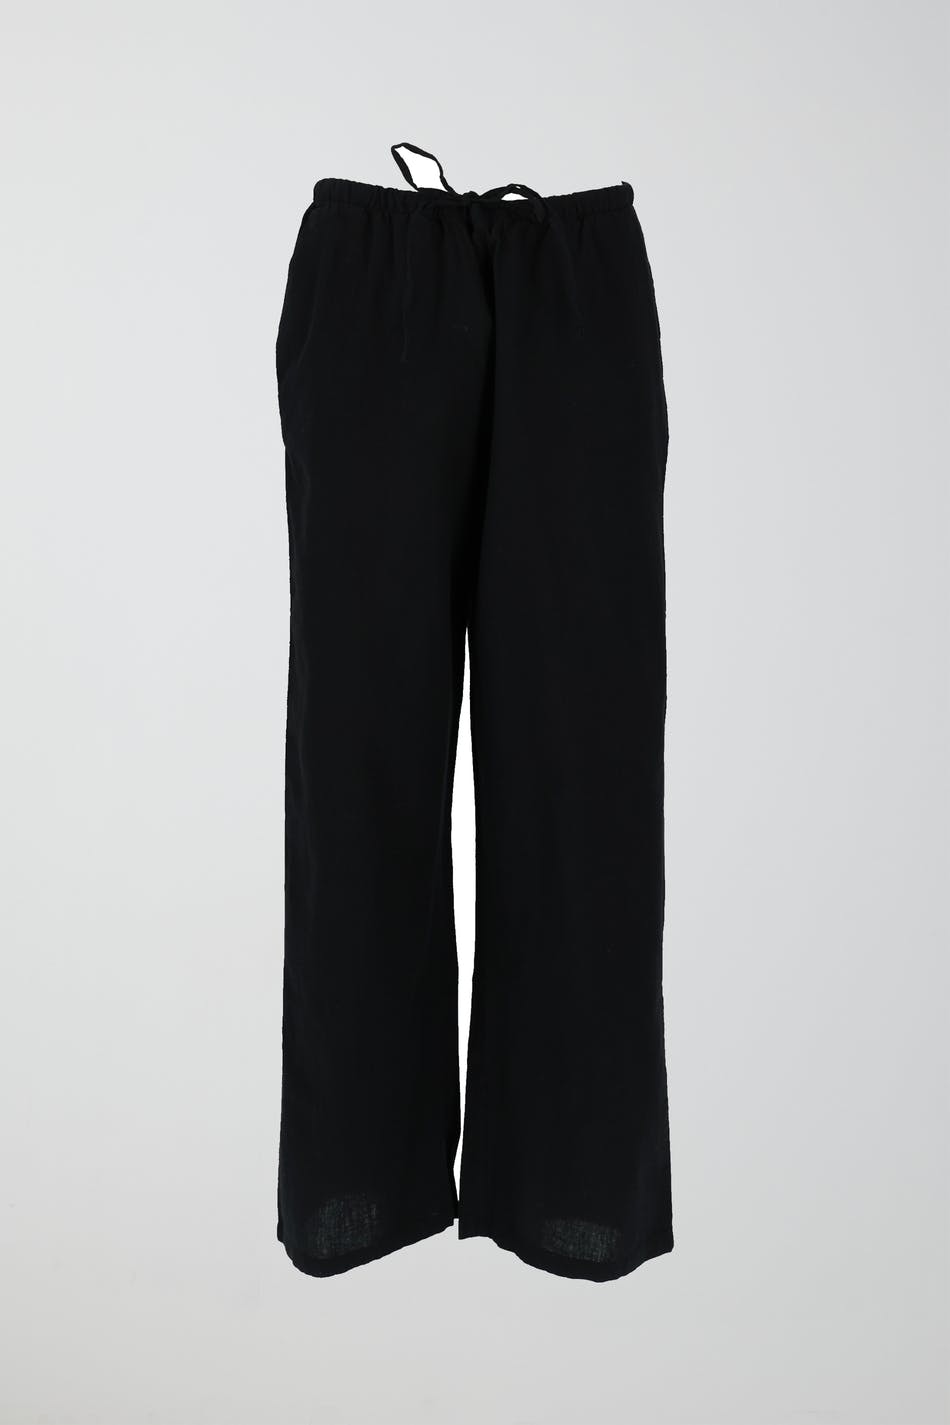 Gina Tricot - Tall linen blend trousers - linnebyxor - Black - XL - Female